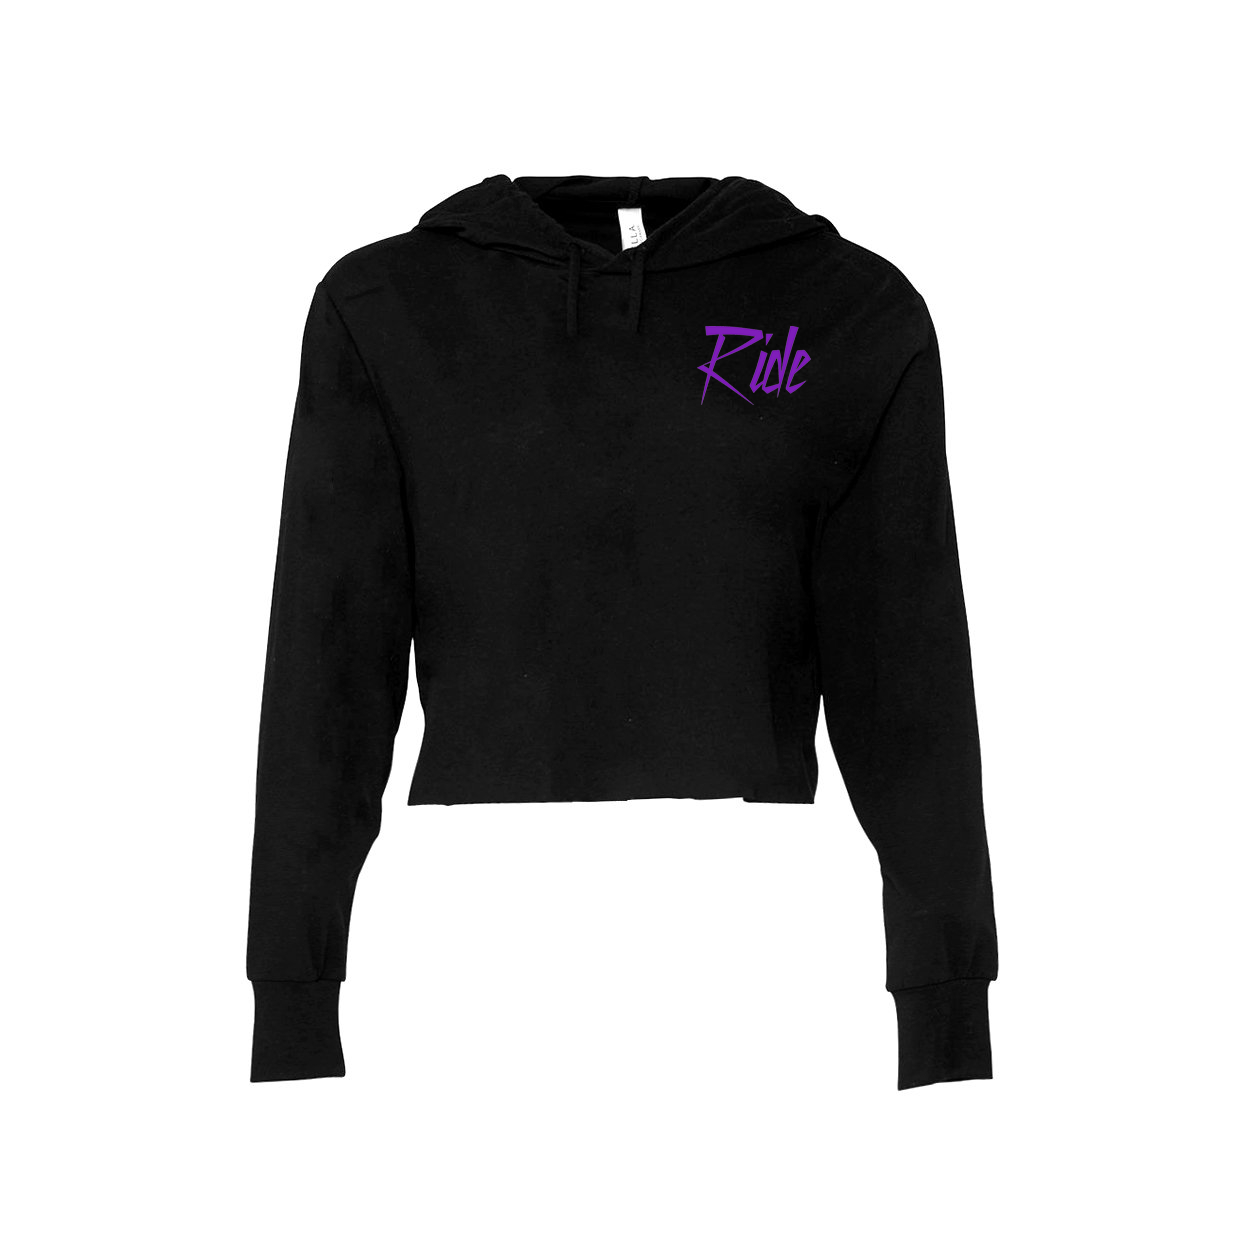 Ride Purple Logo Night Out Womens Cropped Sweatshirt Black (White Logo)